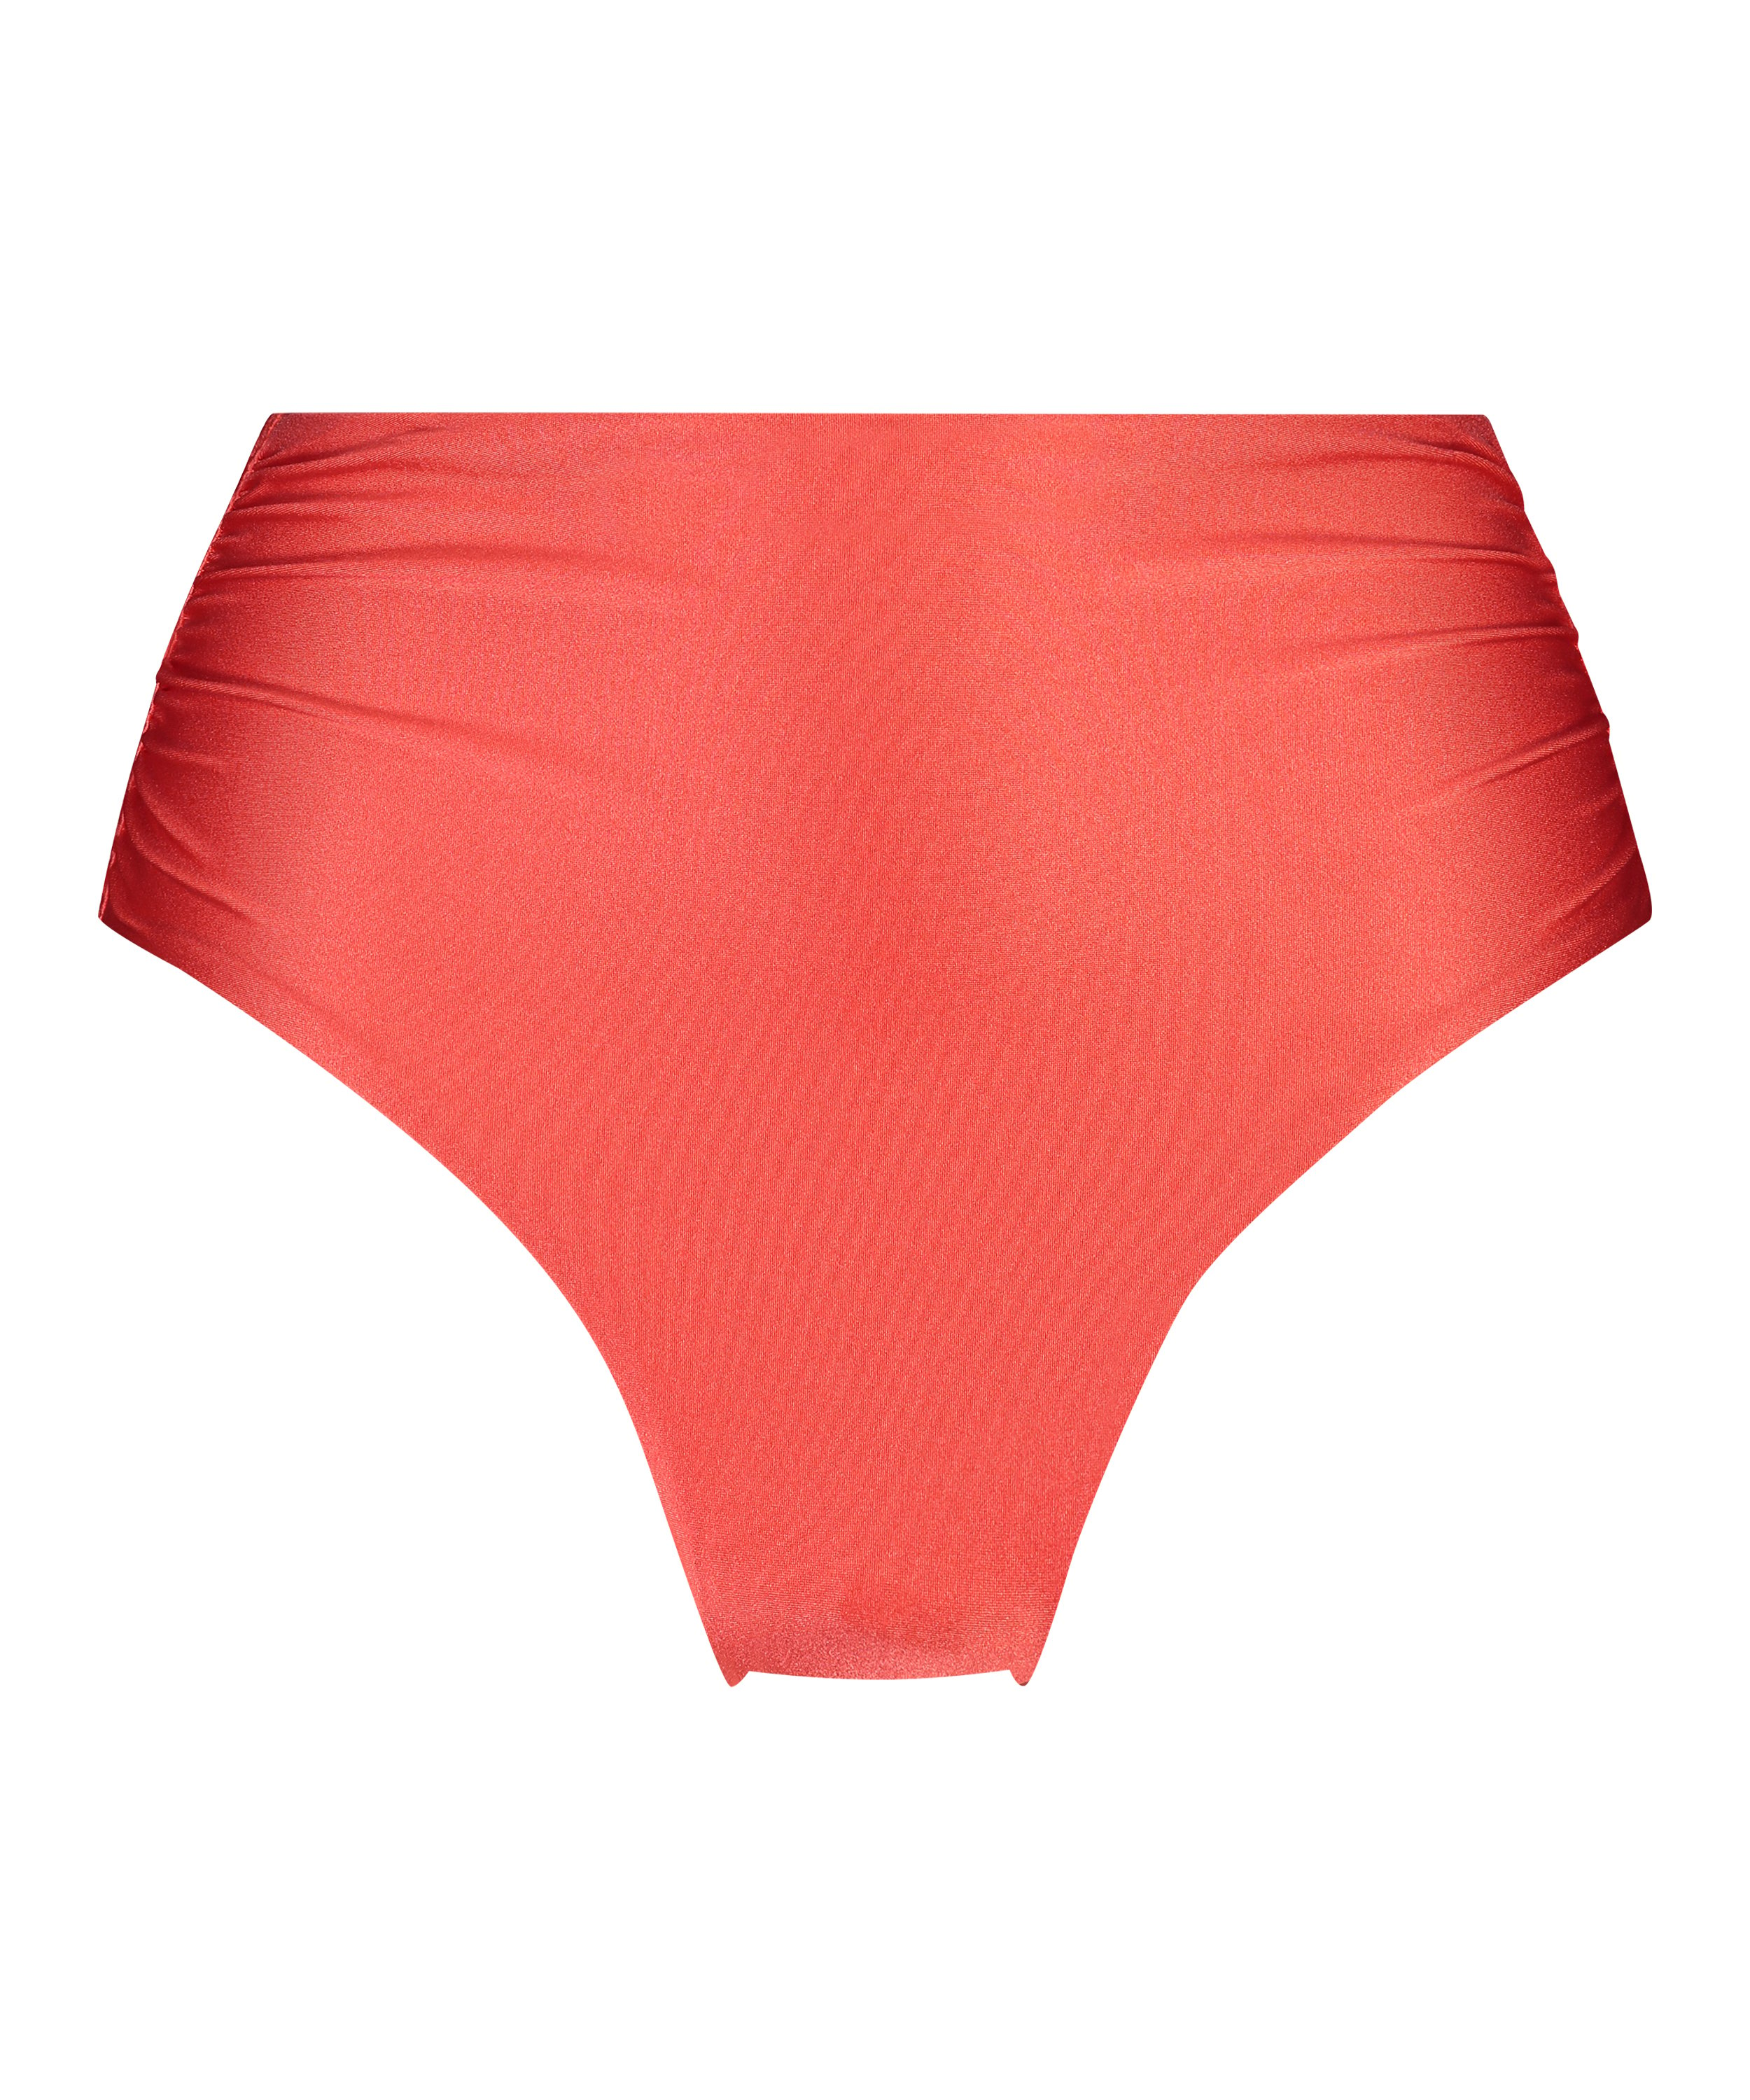 Luxe Rio Bikini Bottoms, Red, main